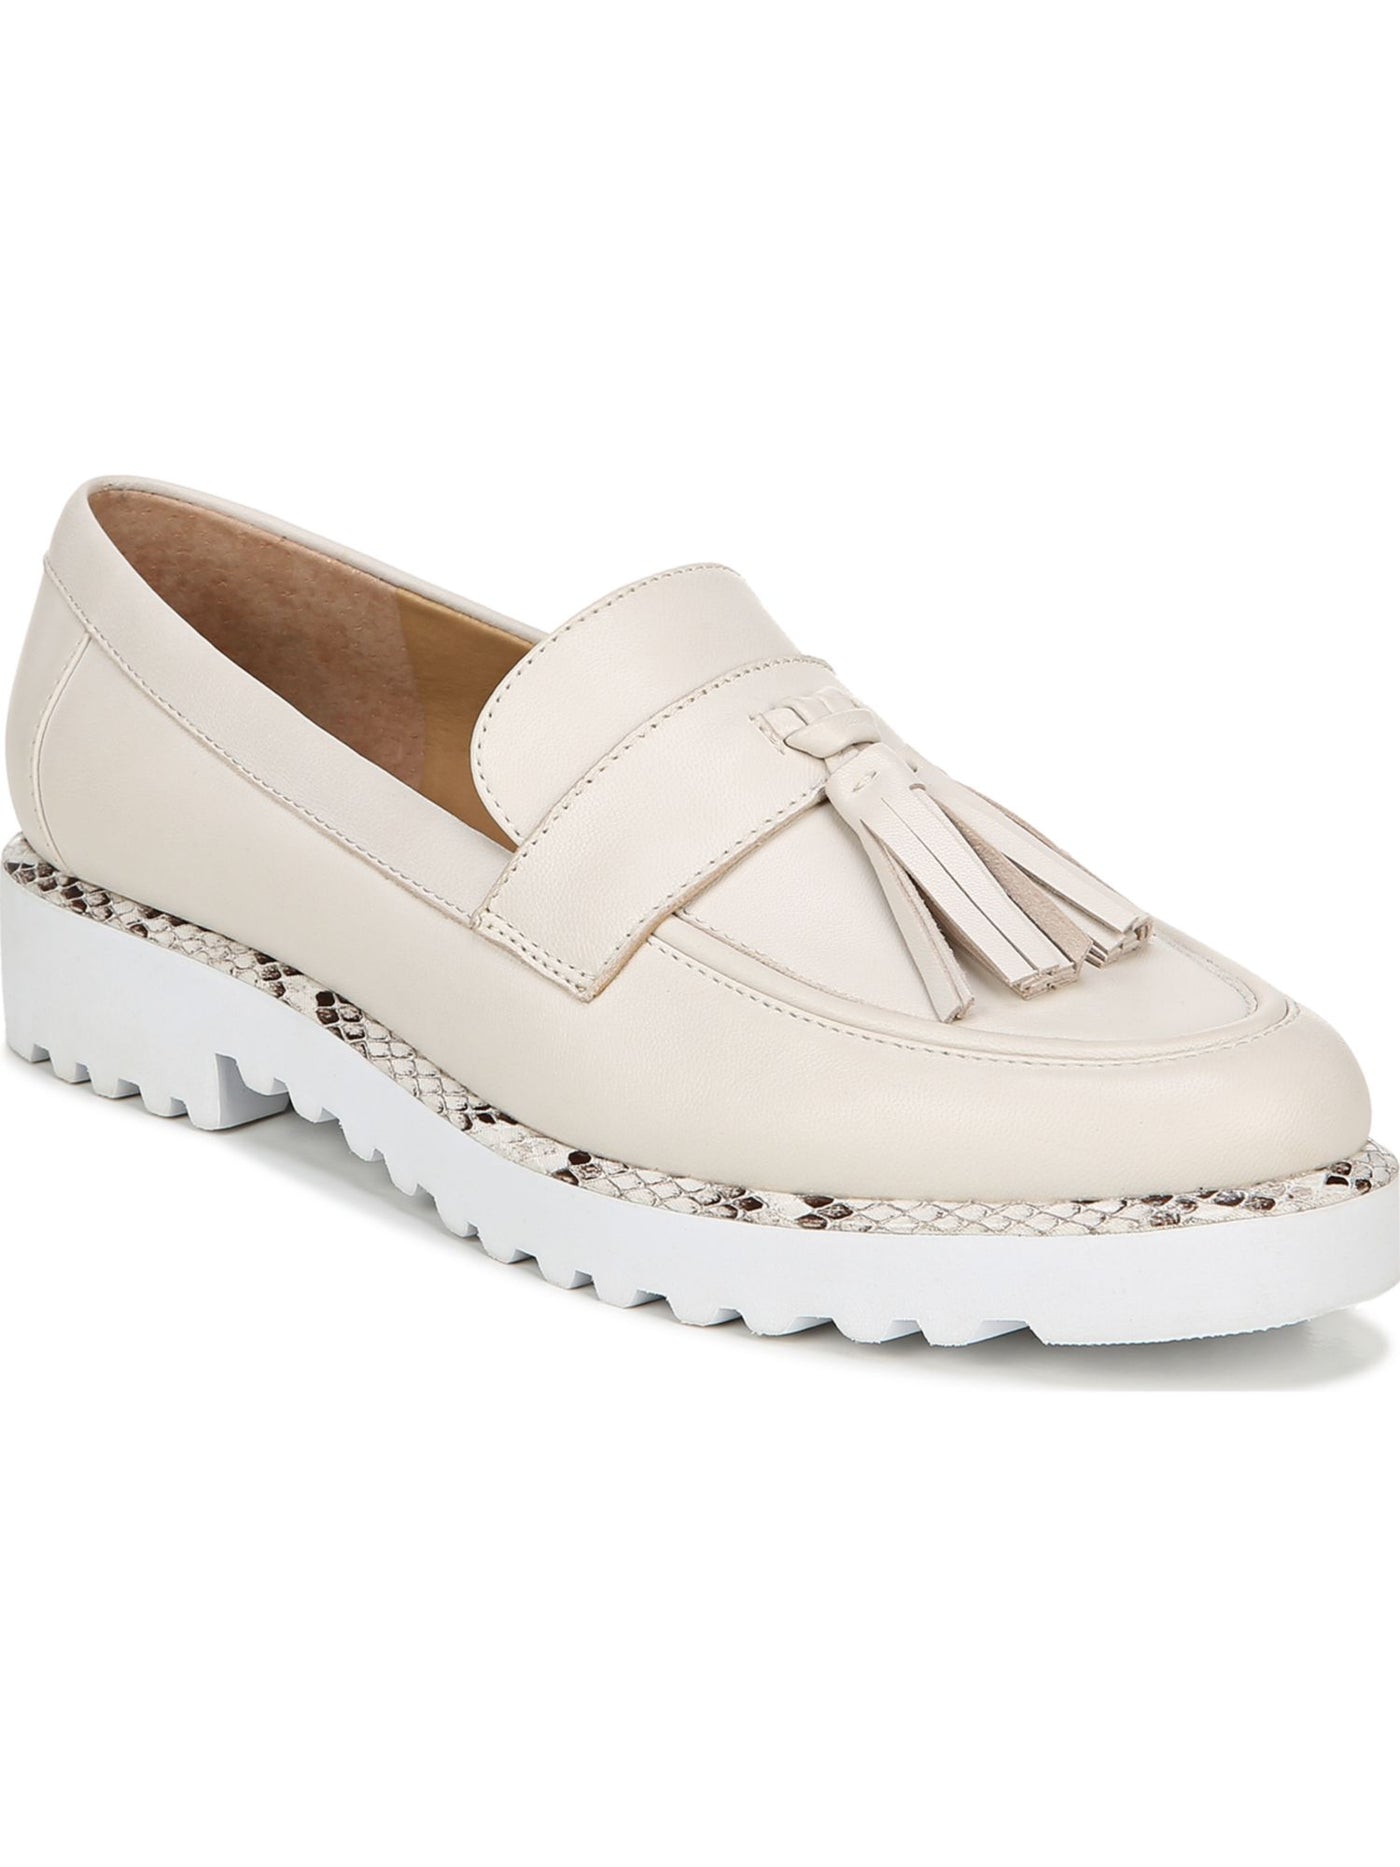 FRANCO SARTO Womens Ivory Comfort Tasseled Lug Sole Carolynn Round Toe Block Heel Slip On Loafers Shoes 9 M